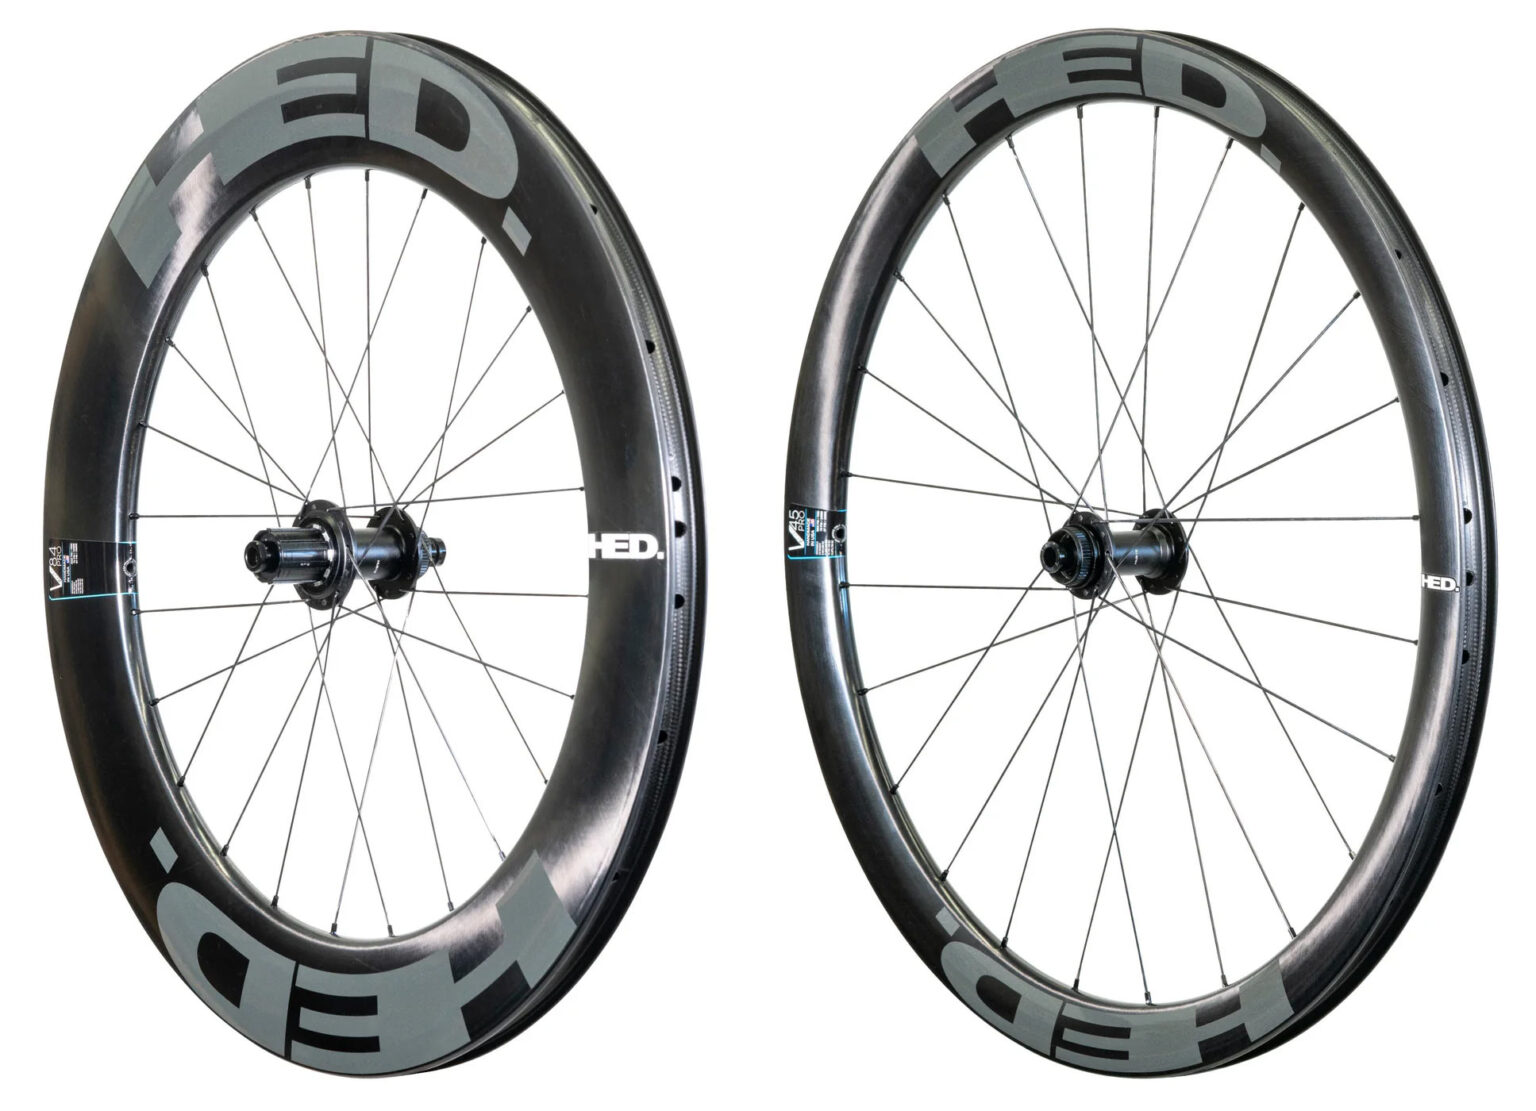 HED Vanquish Pro road bike wheels shown in different depths